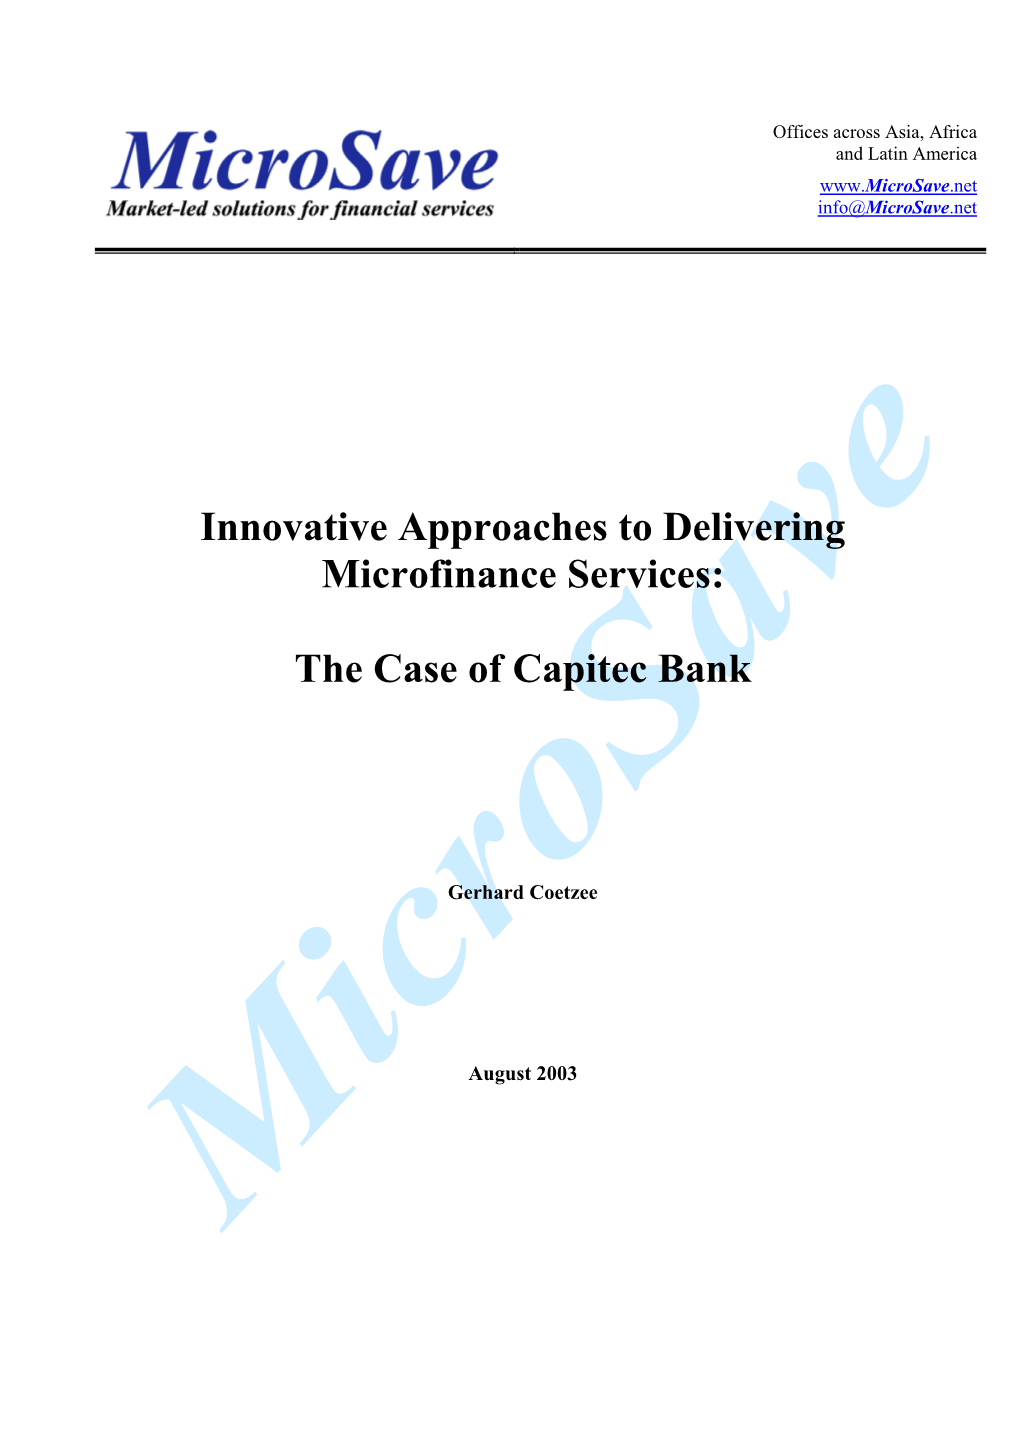 The Case of Capitec Bank